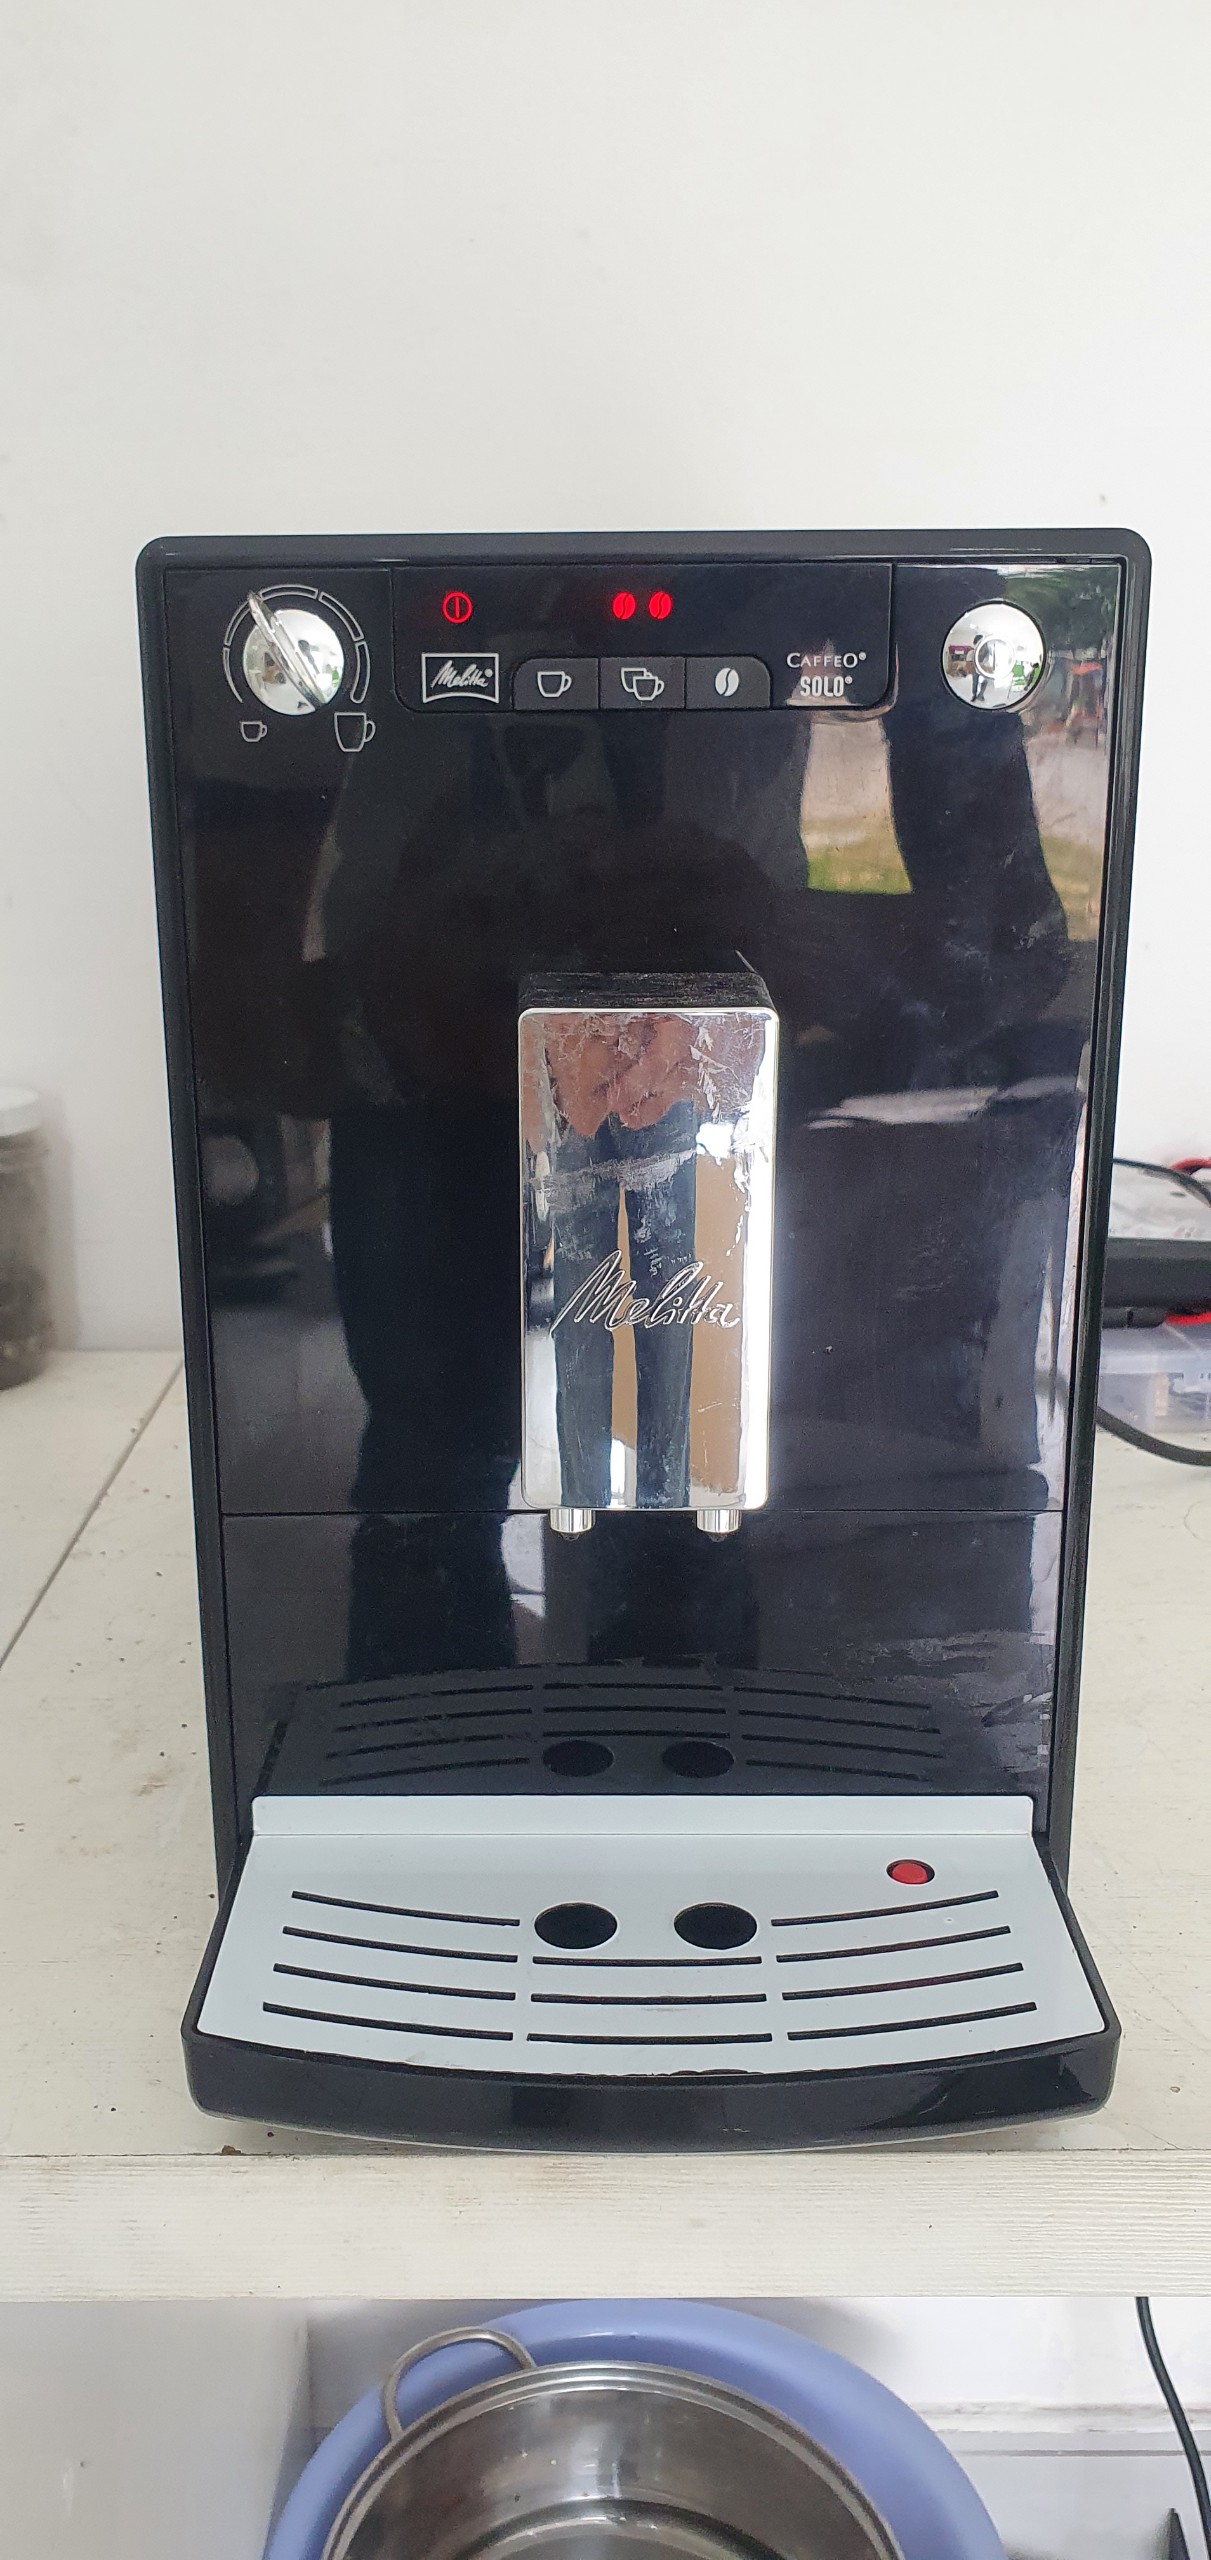 mieleta 3 - Sửa máy cafe tự động Melitta uy tín tại HCM